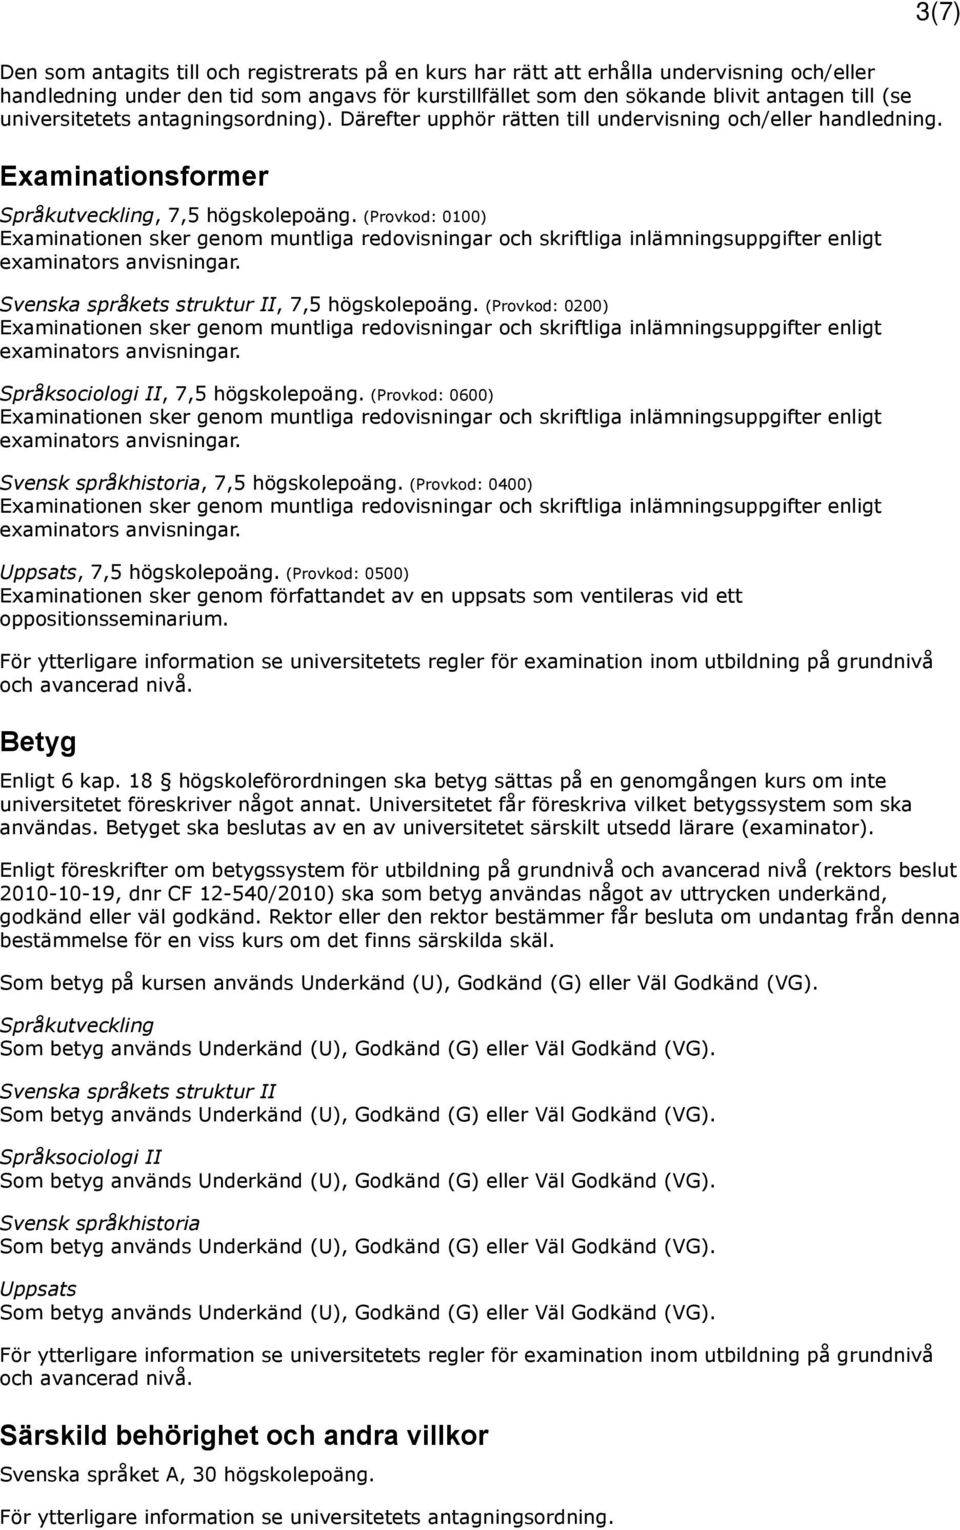 (Provkod: 0100) Svenska språkets struktur II, 7,5 högskolepoäng. (Provkod: 0200) Språksociologi II, 7,5 högskolepoäng. (Provkod: 0600) Svensk språkhistoria, 7,5 högskolepoäng.